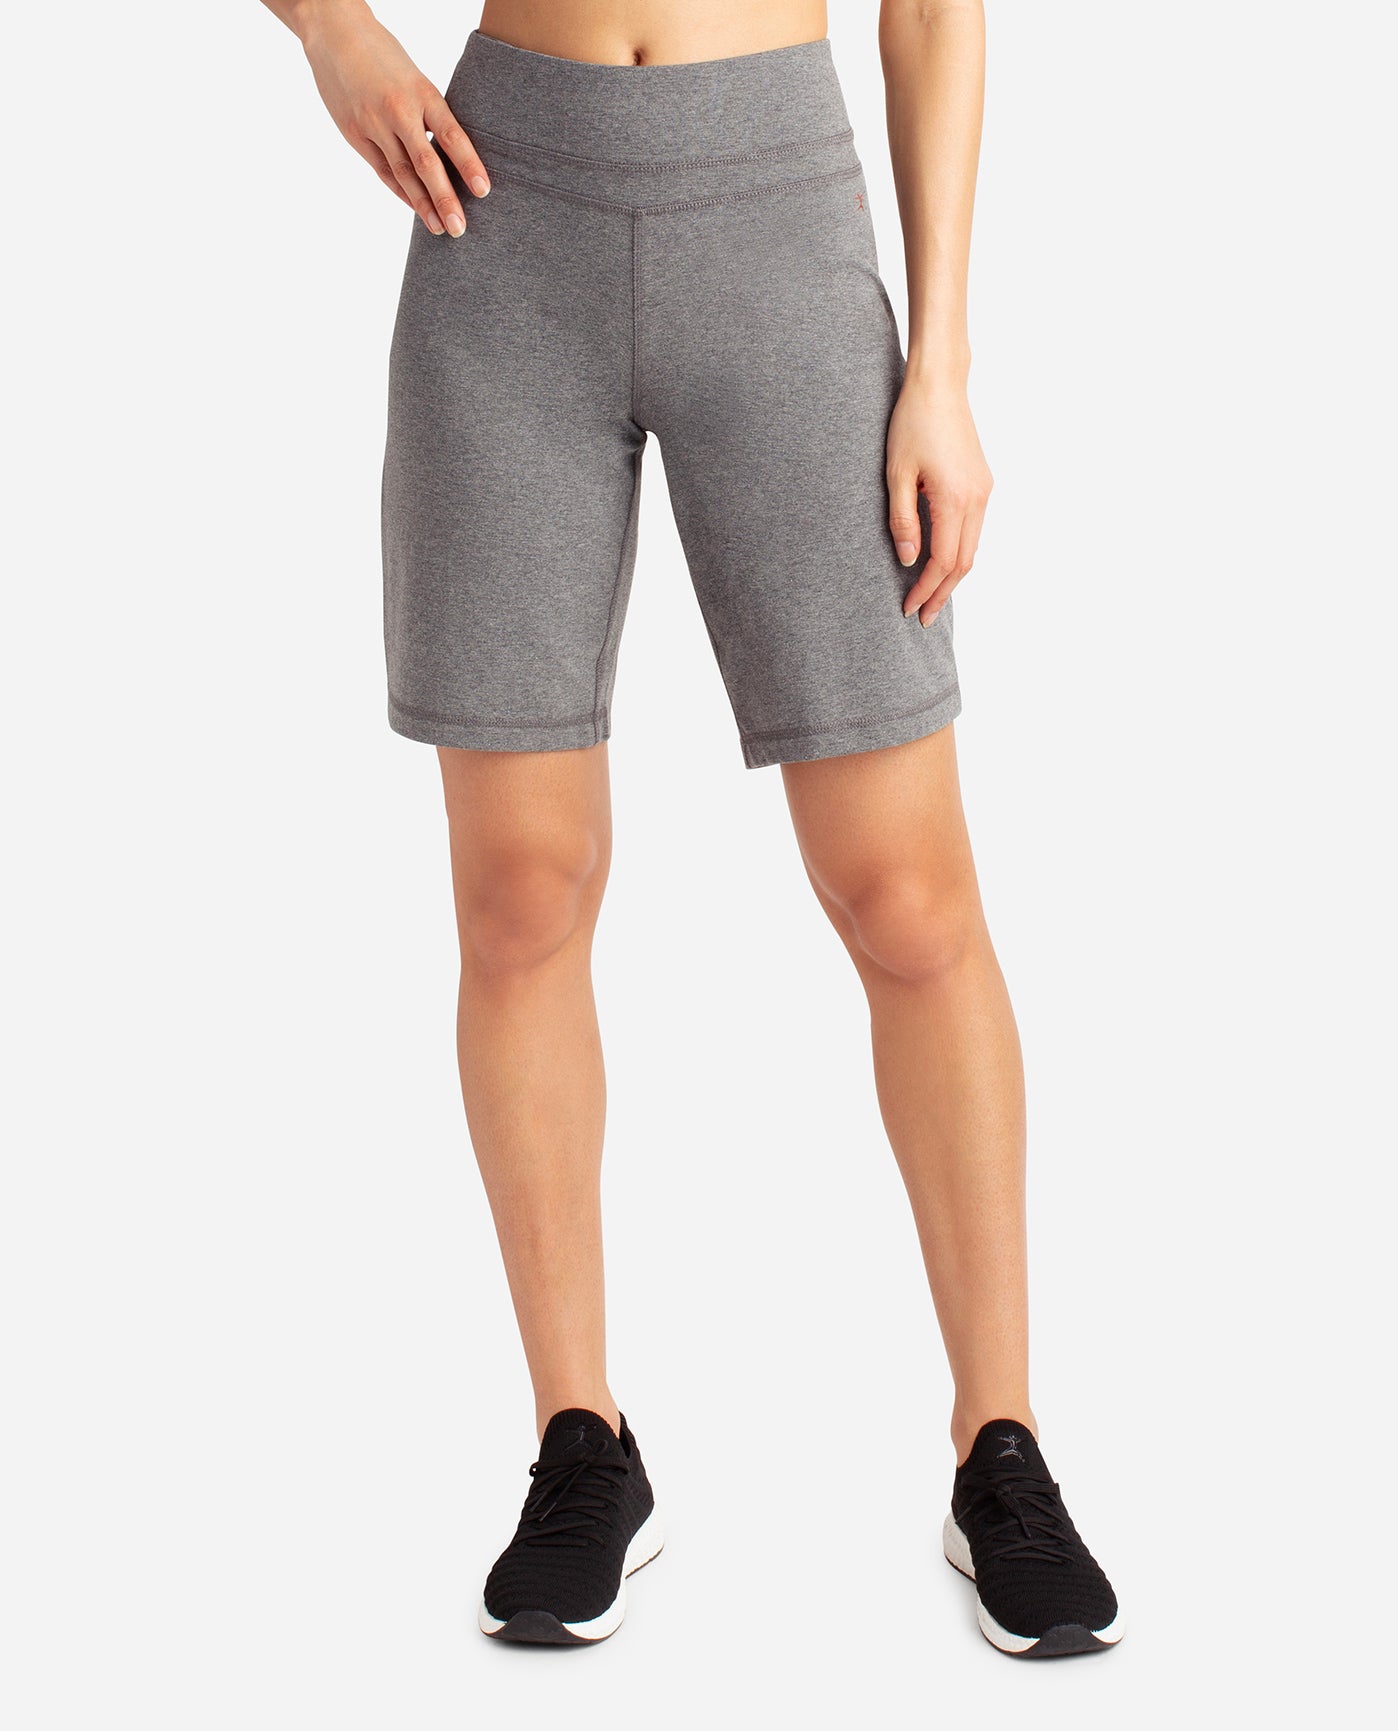 Danskin Now Women's Active Wear Shorts Size Medium 8-10